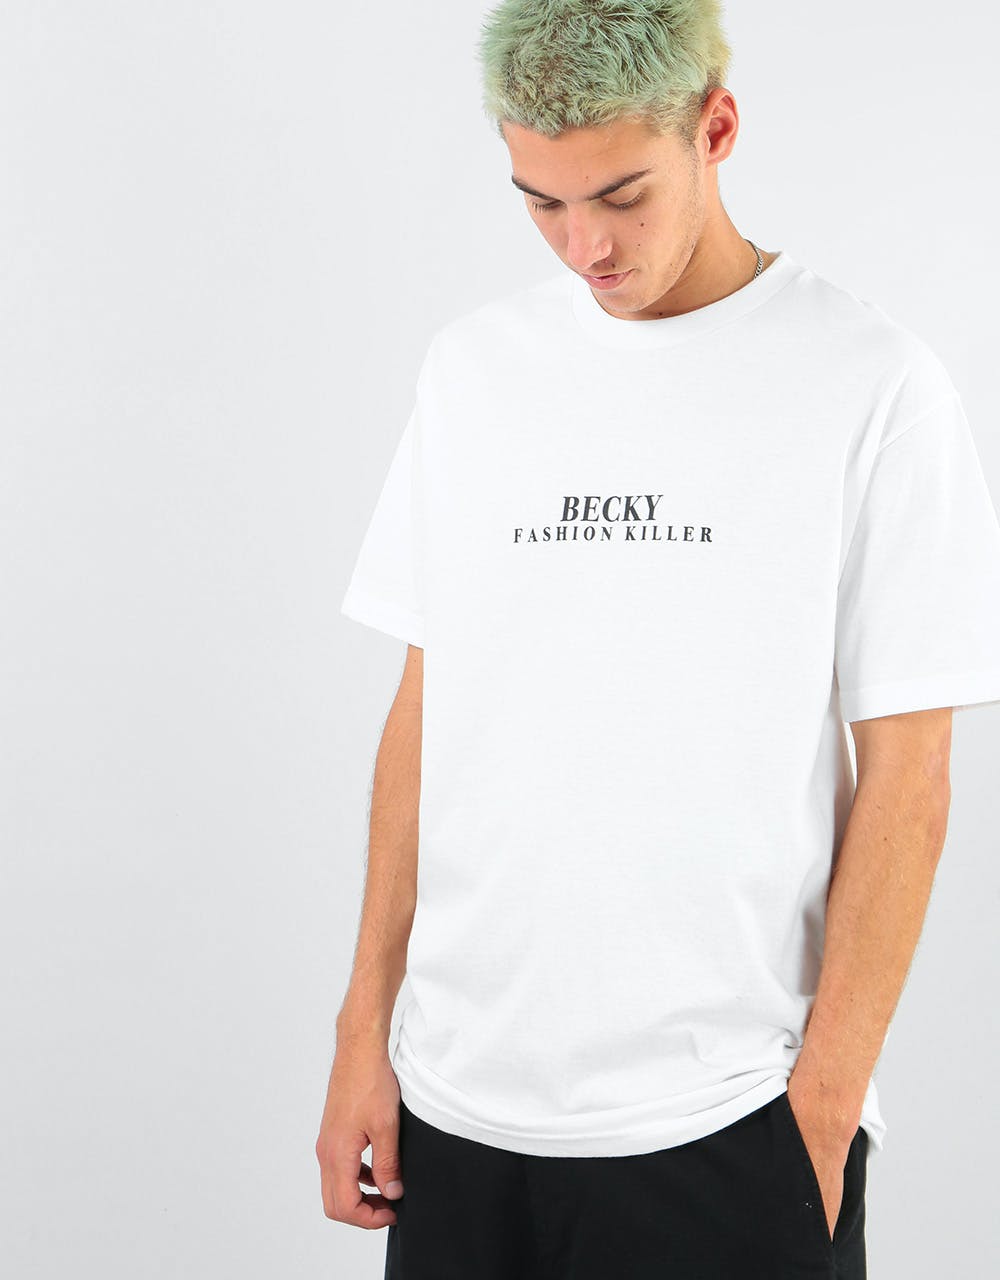 Becky Factory Fashion Killer T-Shirt - White